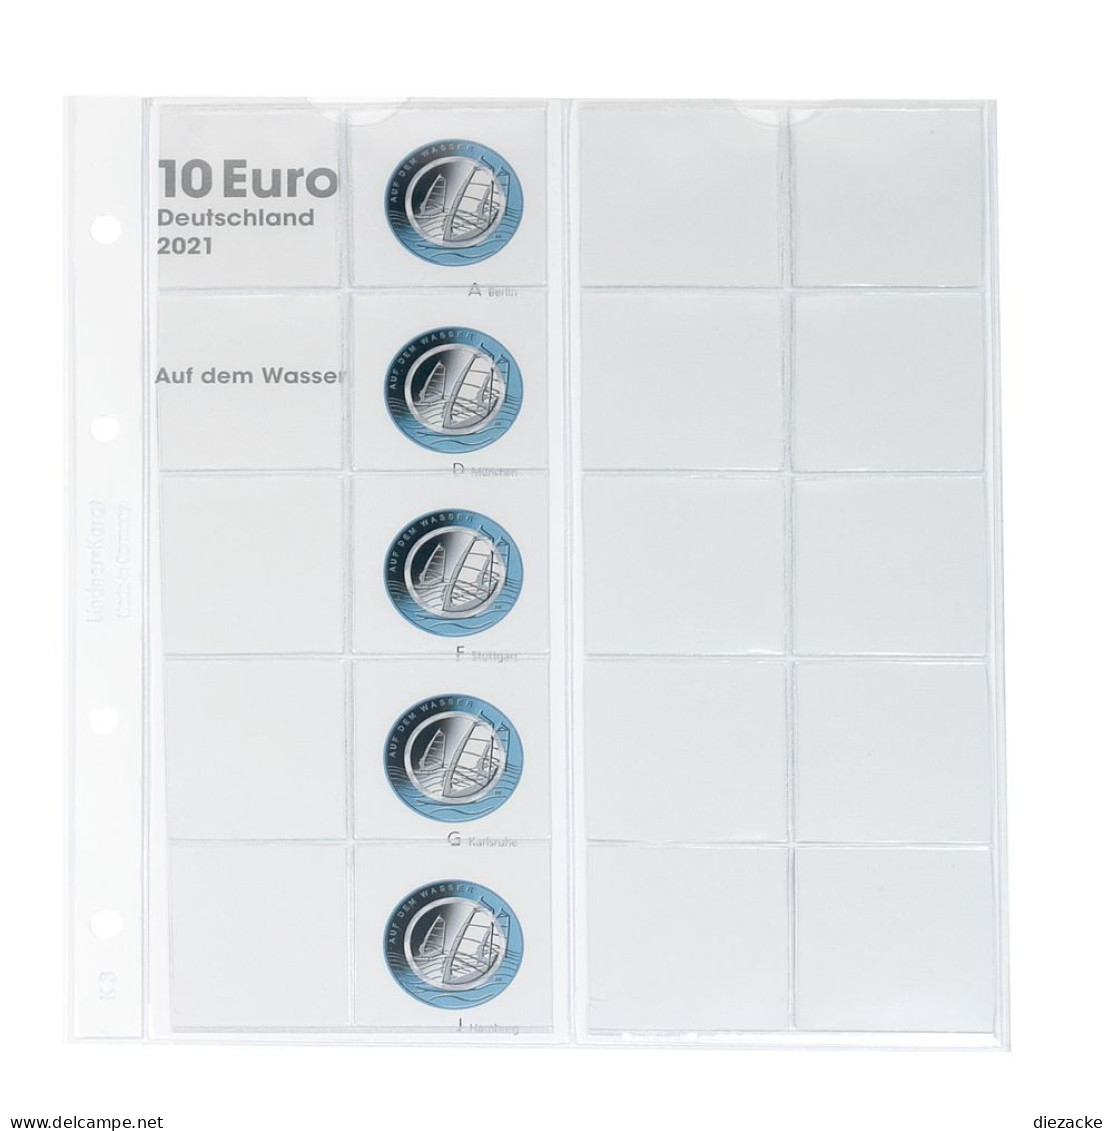 Lindner Vordruckblatt Karat Für 10 Euro-Münzen Polymerring 1110-3 Neu - Material